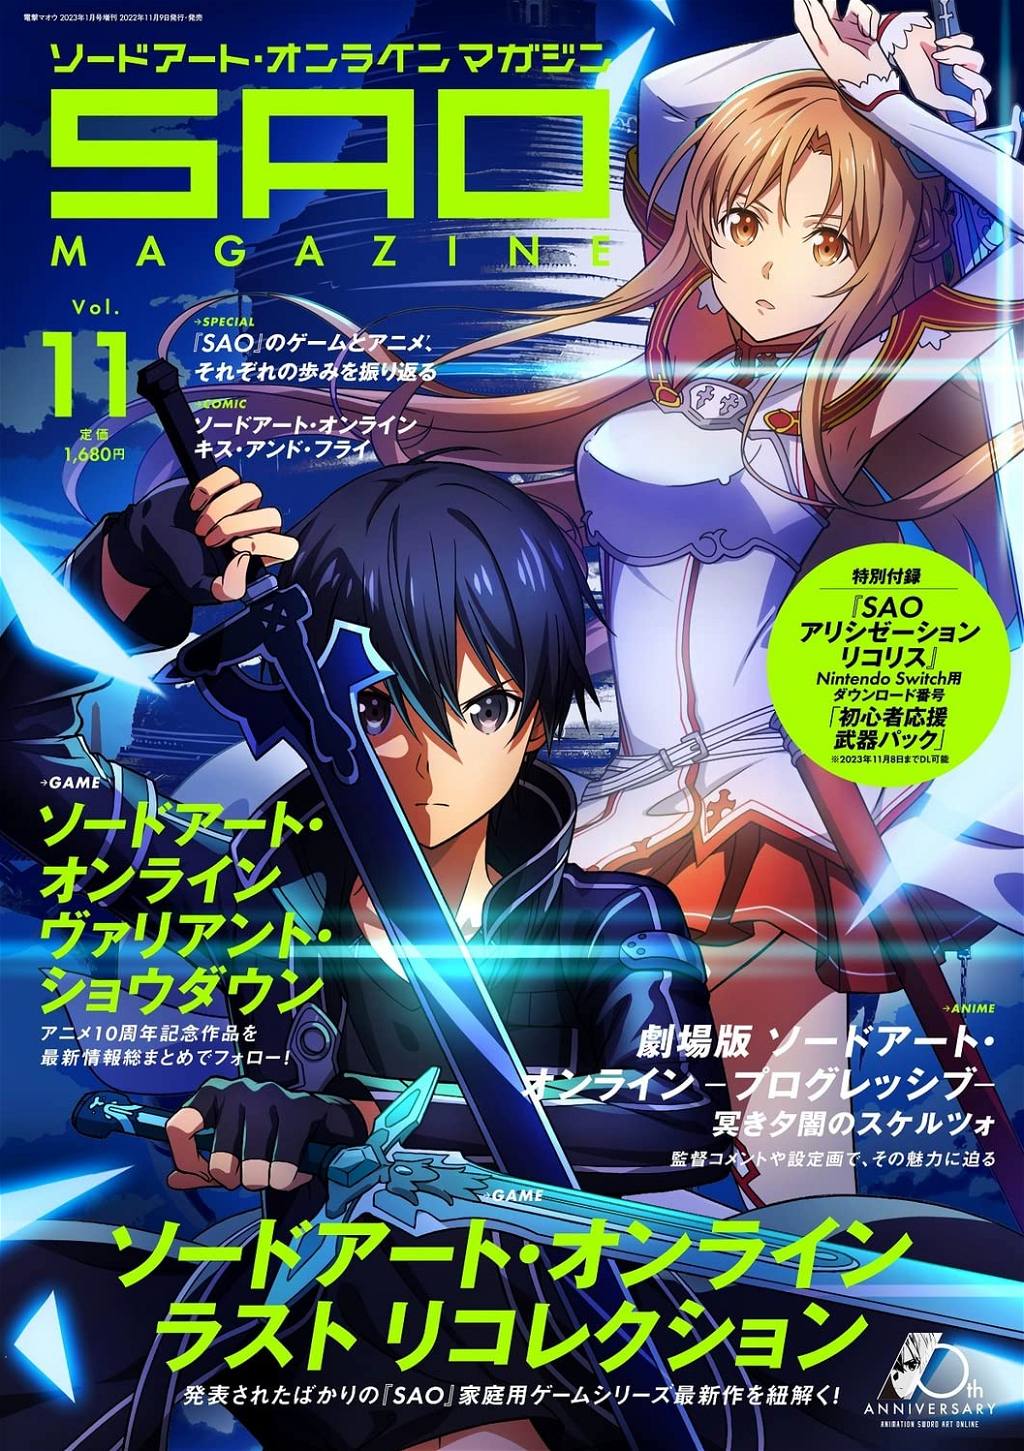 Dengeki Maoh January 2023 Special Edition Sword Art Online Magazine 